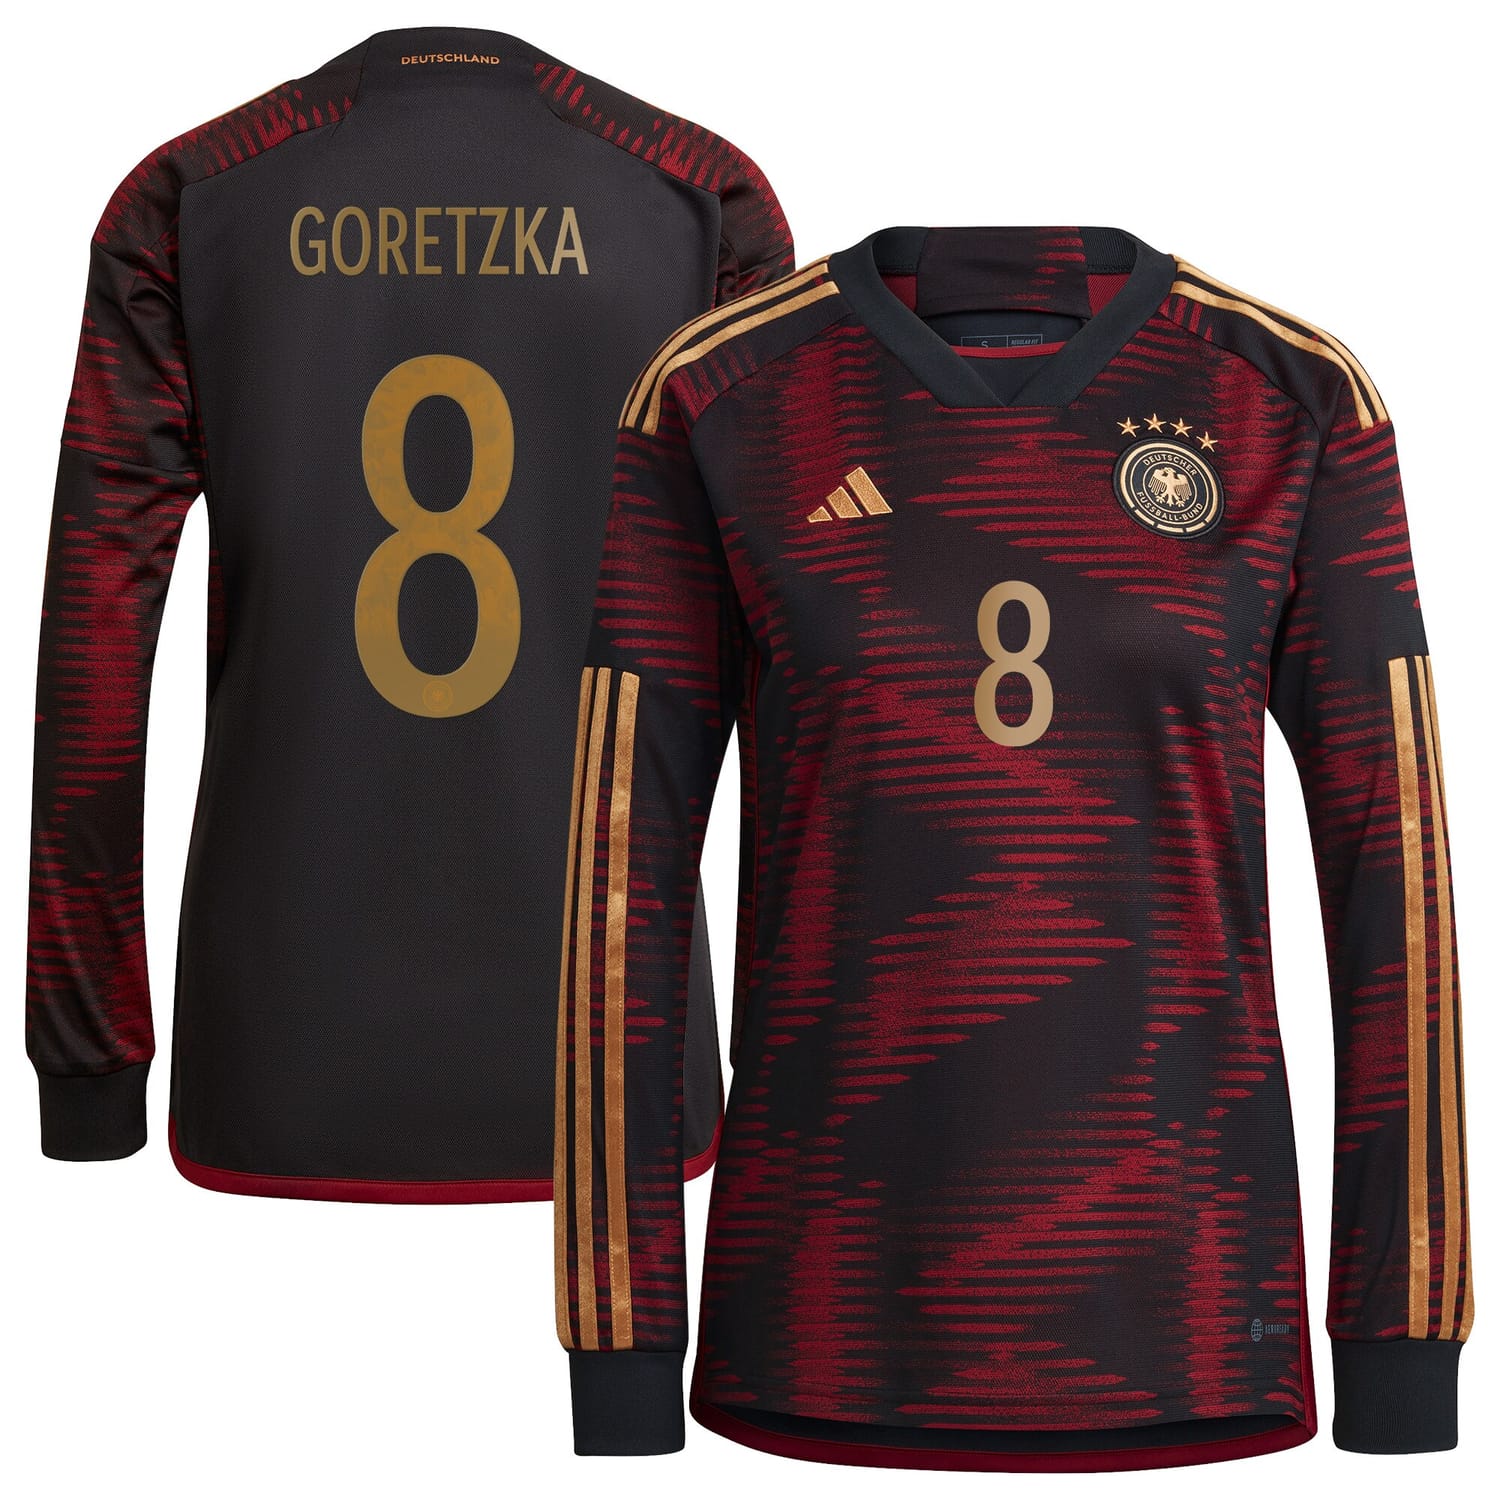 Germany National Team Away Jersey Shirt Long Sleeve player Leon Goretzka 8 printing for Women